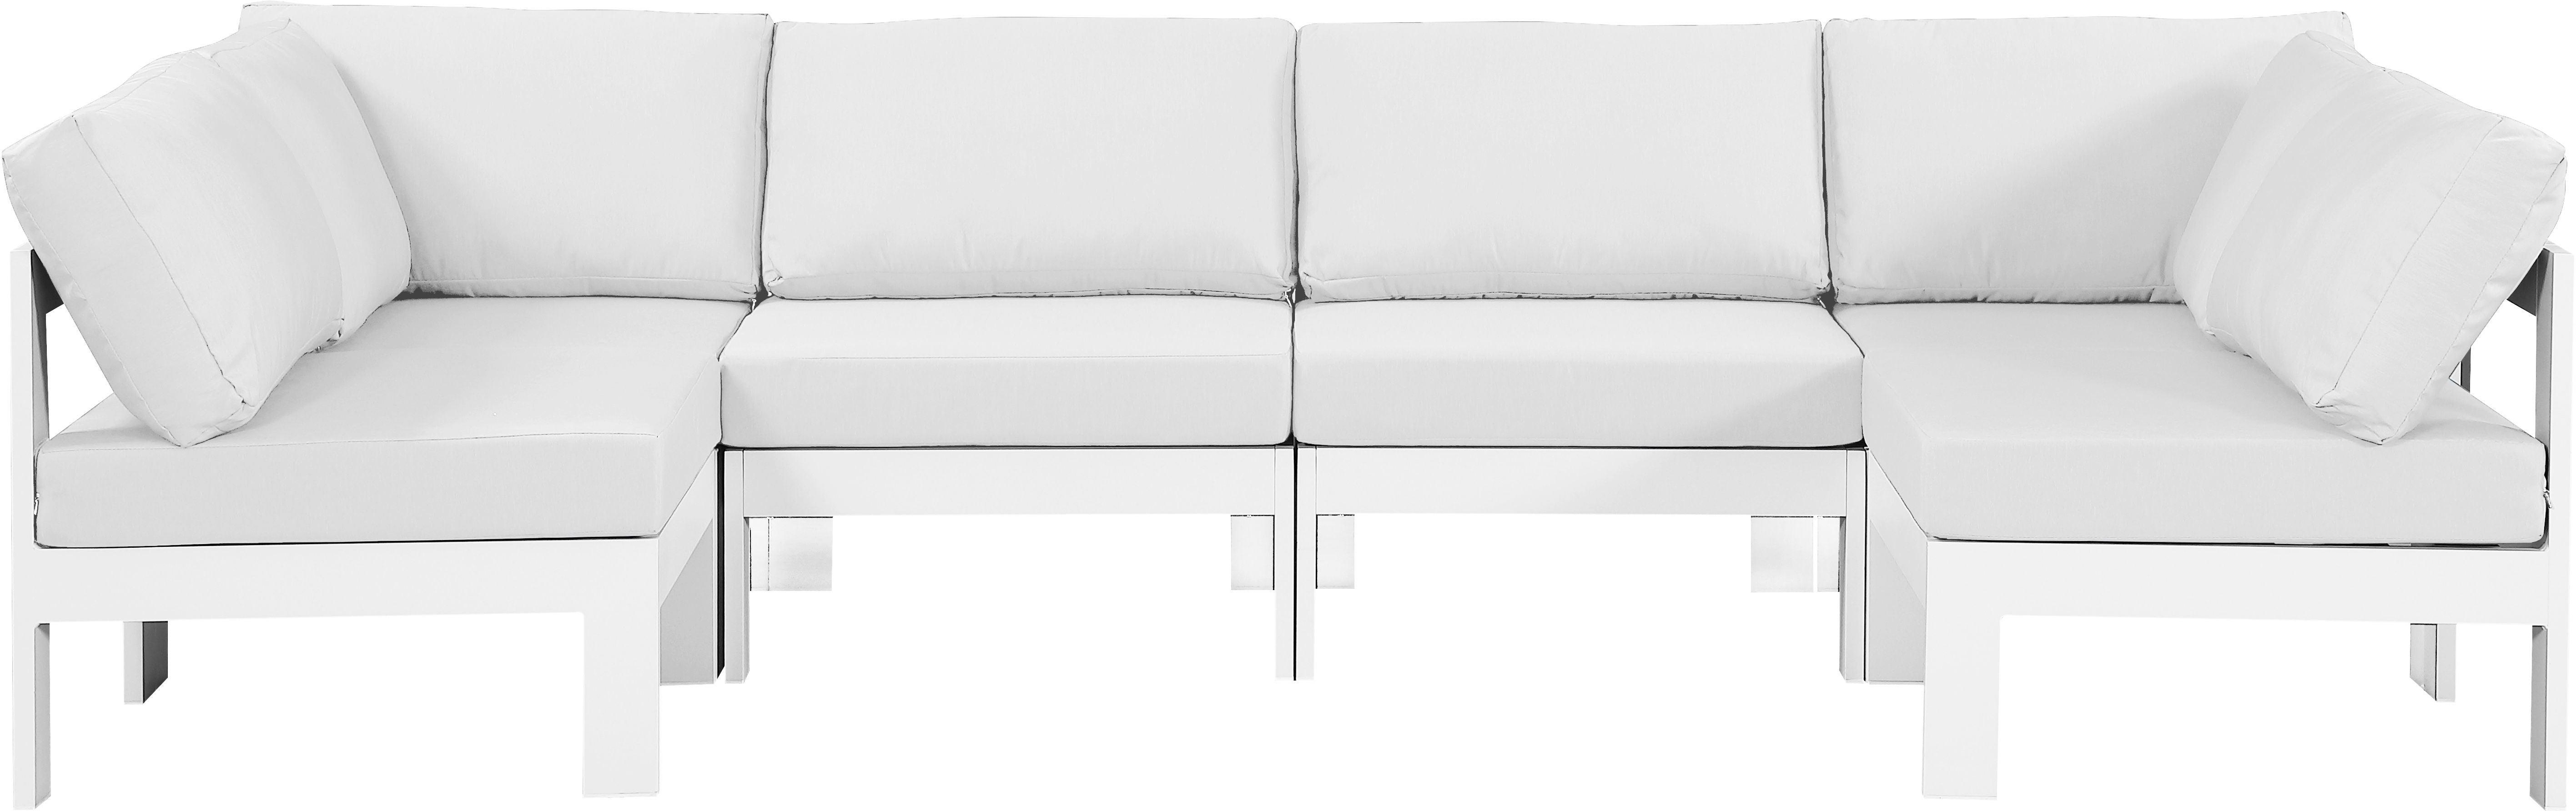 Meridian Furniture - Nizuc - Outdoor Patio Modular Sectional - White - 5th Avenue Furniture